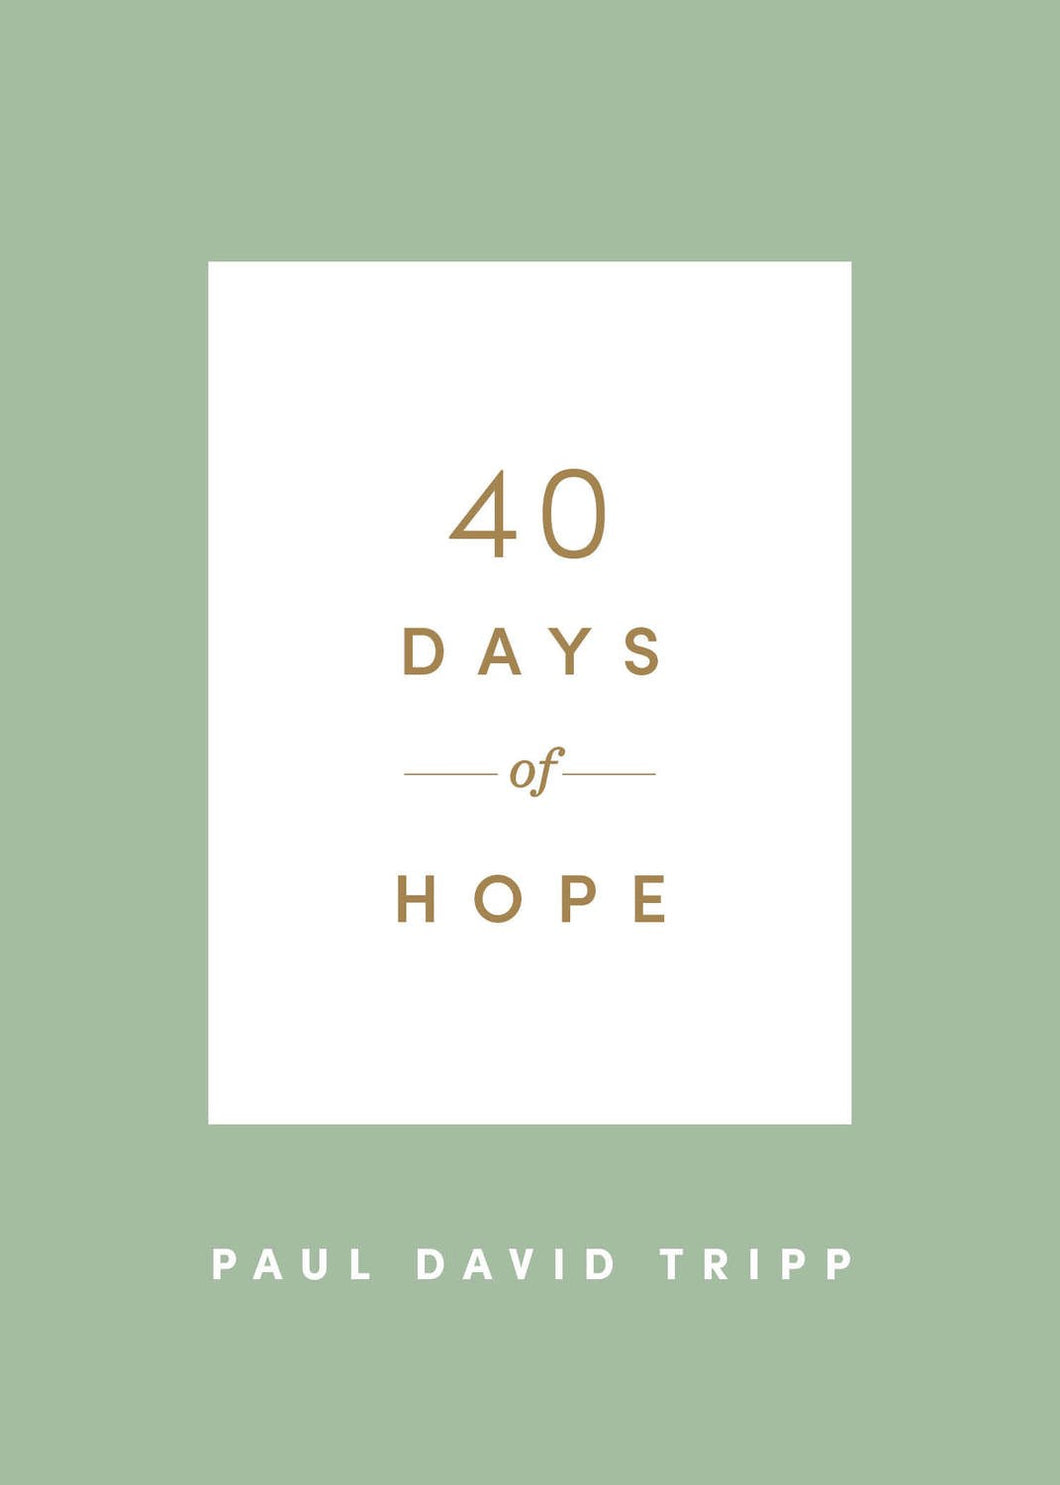 40 Days Of Hope